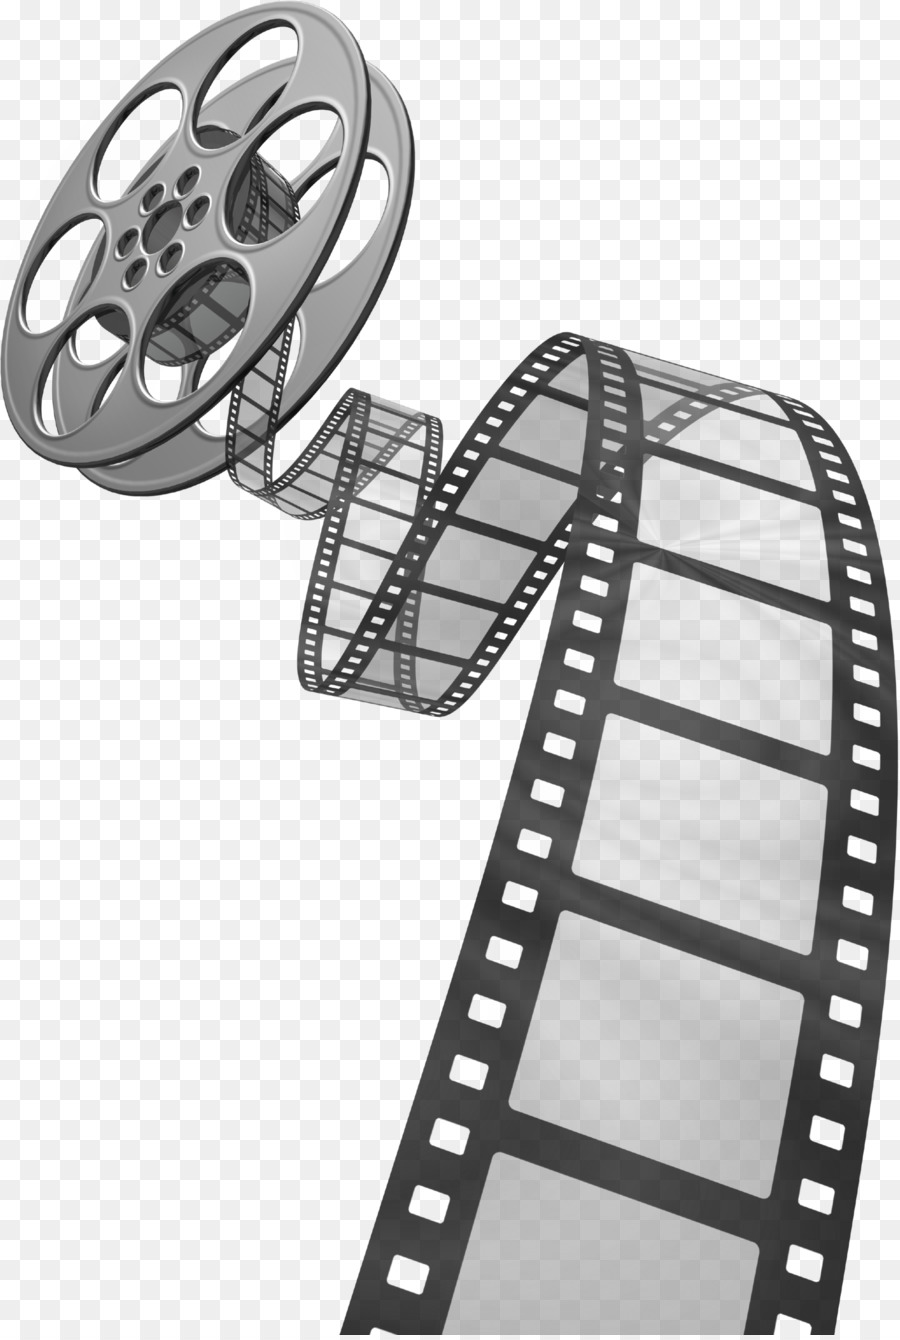 Photographic film Reel Clip art - Movie Film png download - 1600*2373 - Free Transparent Photographic Film png Download.